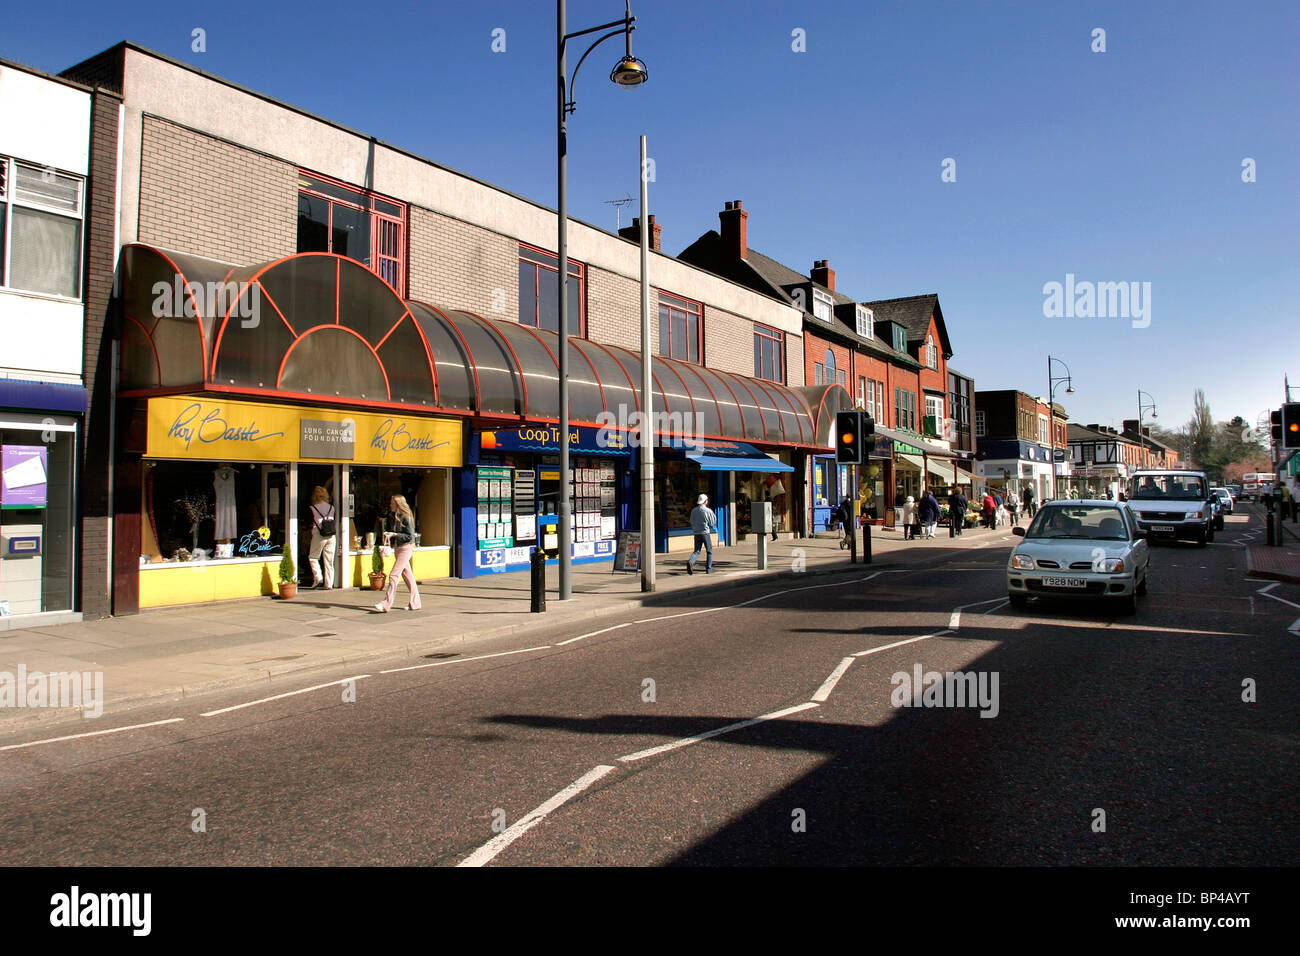 UK, England, Cheshire, Stockport, Cheadle, High Street shops Stock Photo